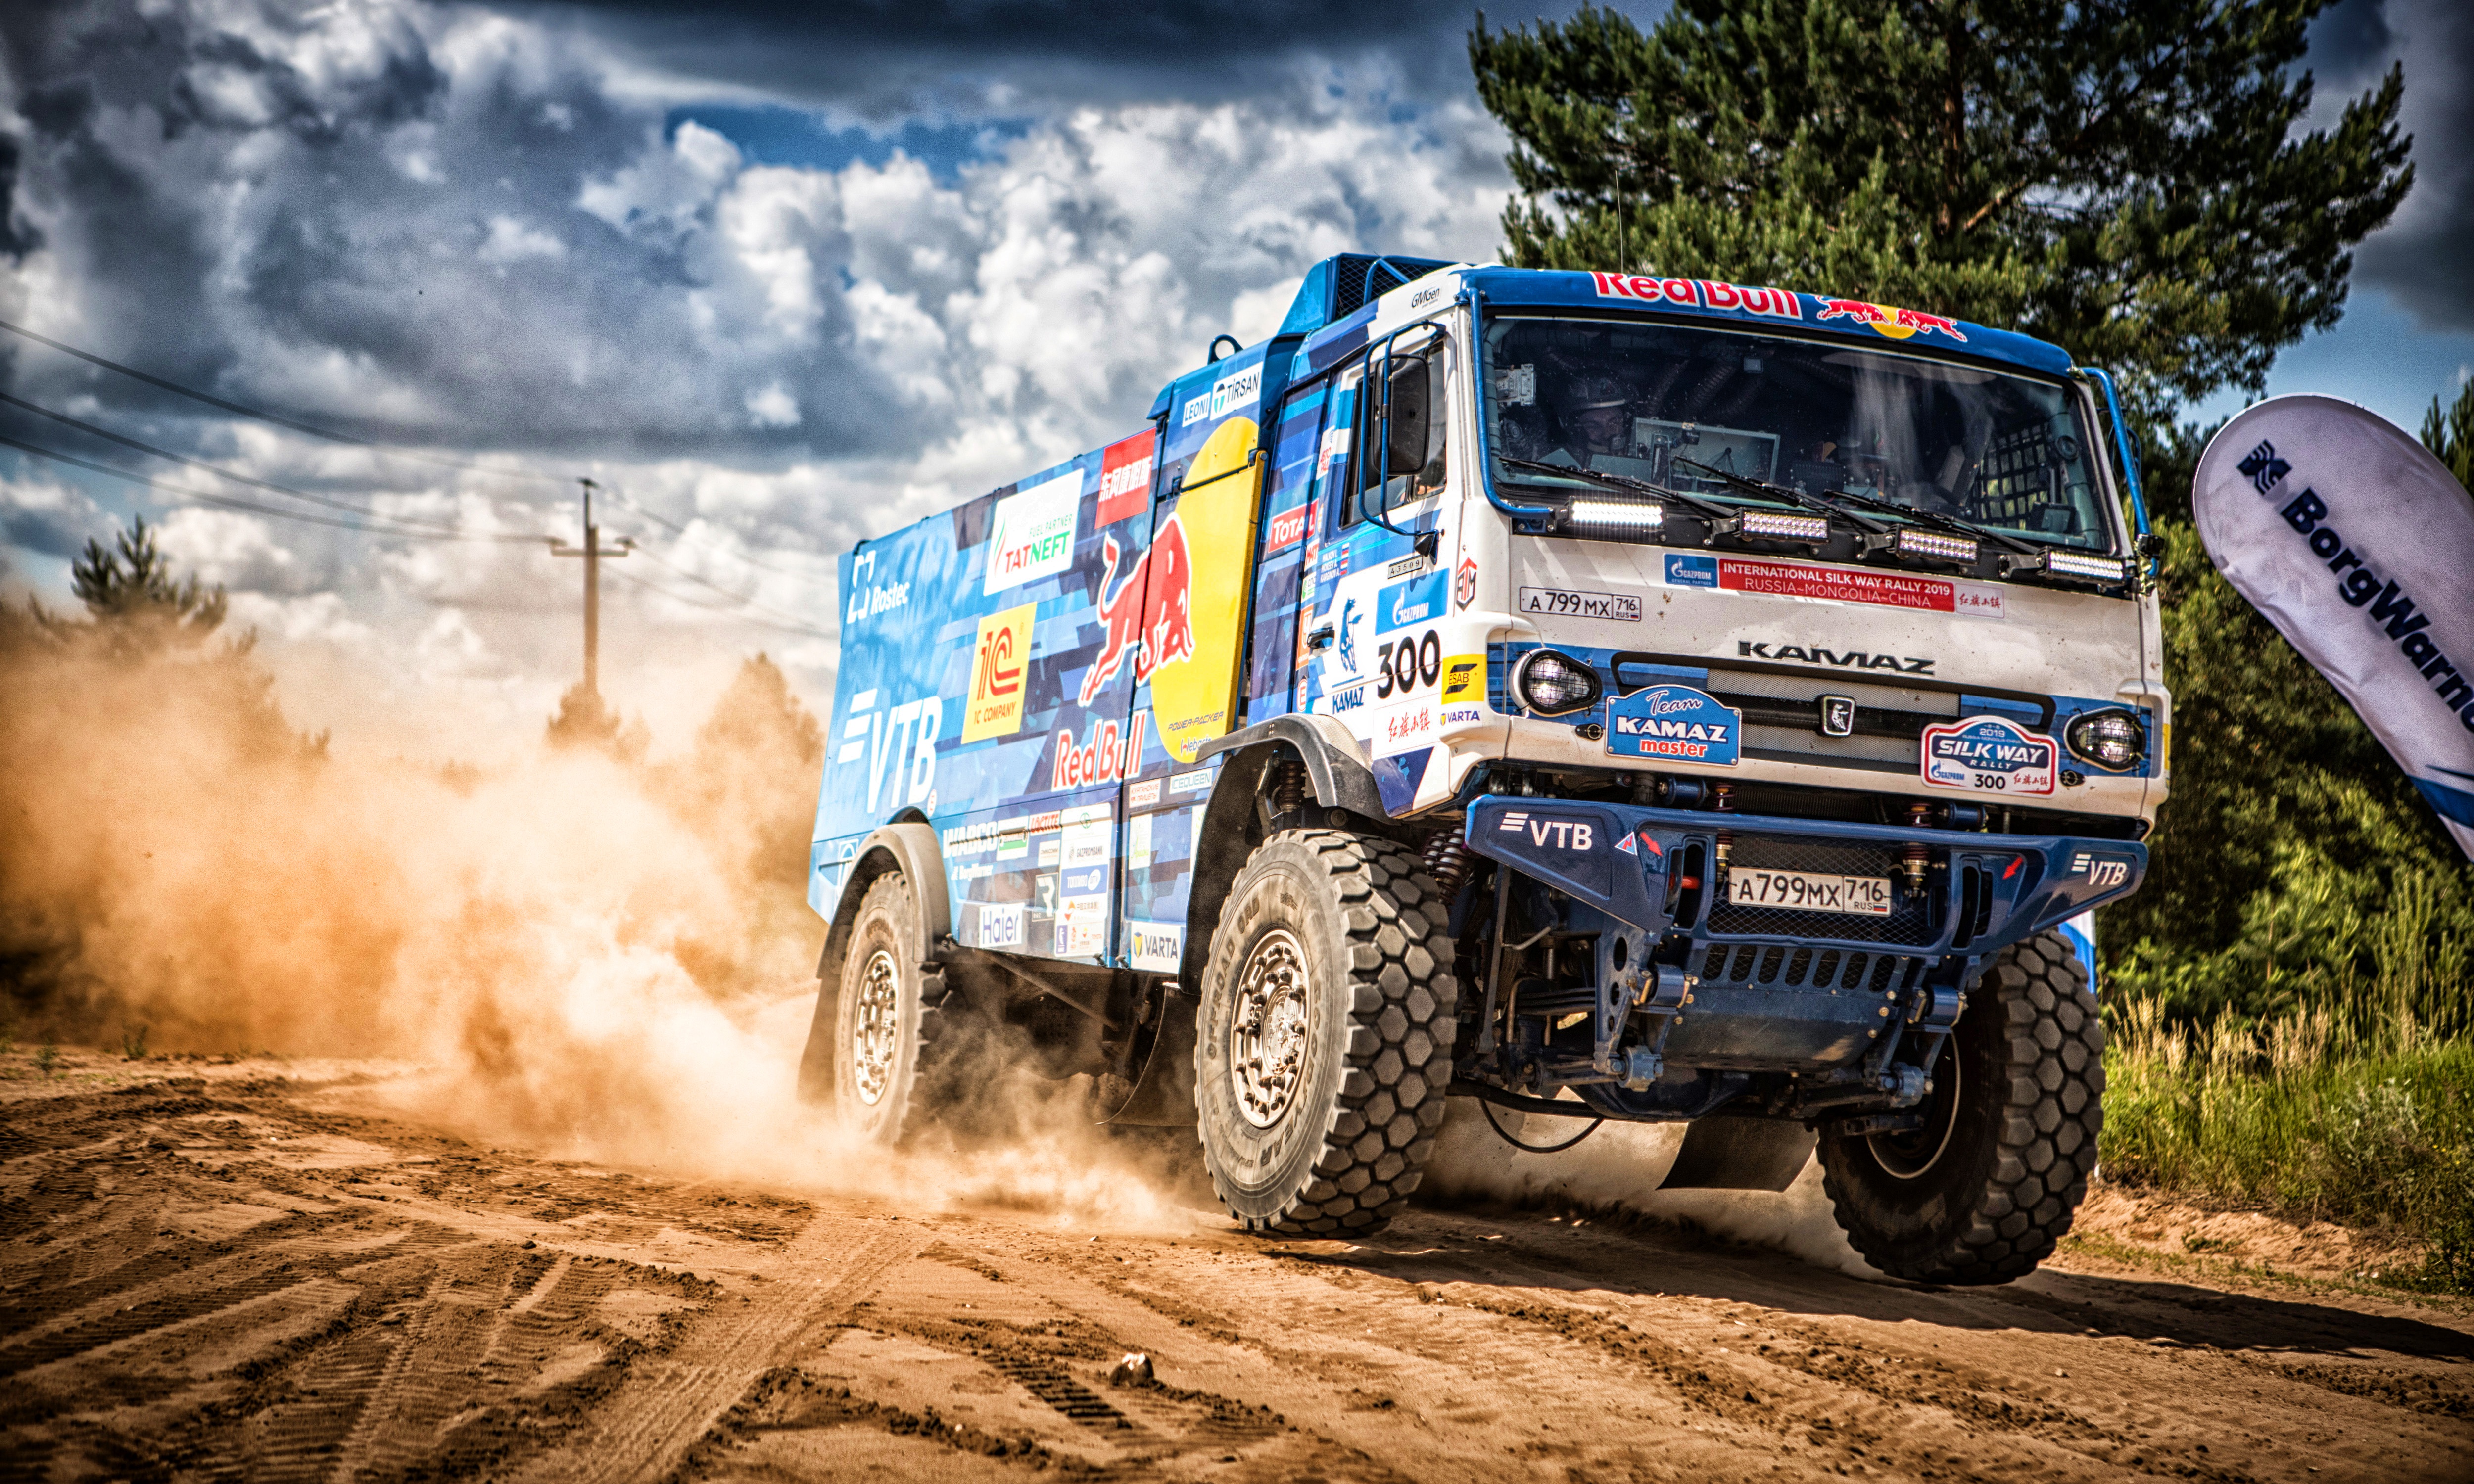 General 5000x3000 Rally truck racing dust vehicle Kamaz Russian trucks clouds frontal view dirt road dirt